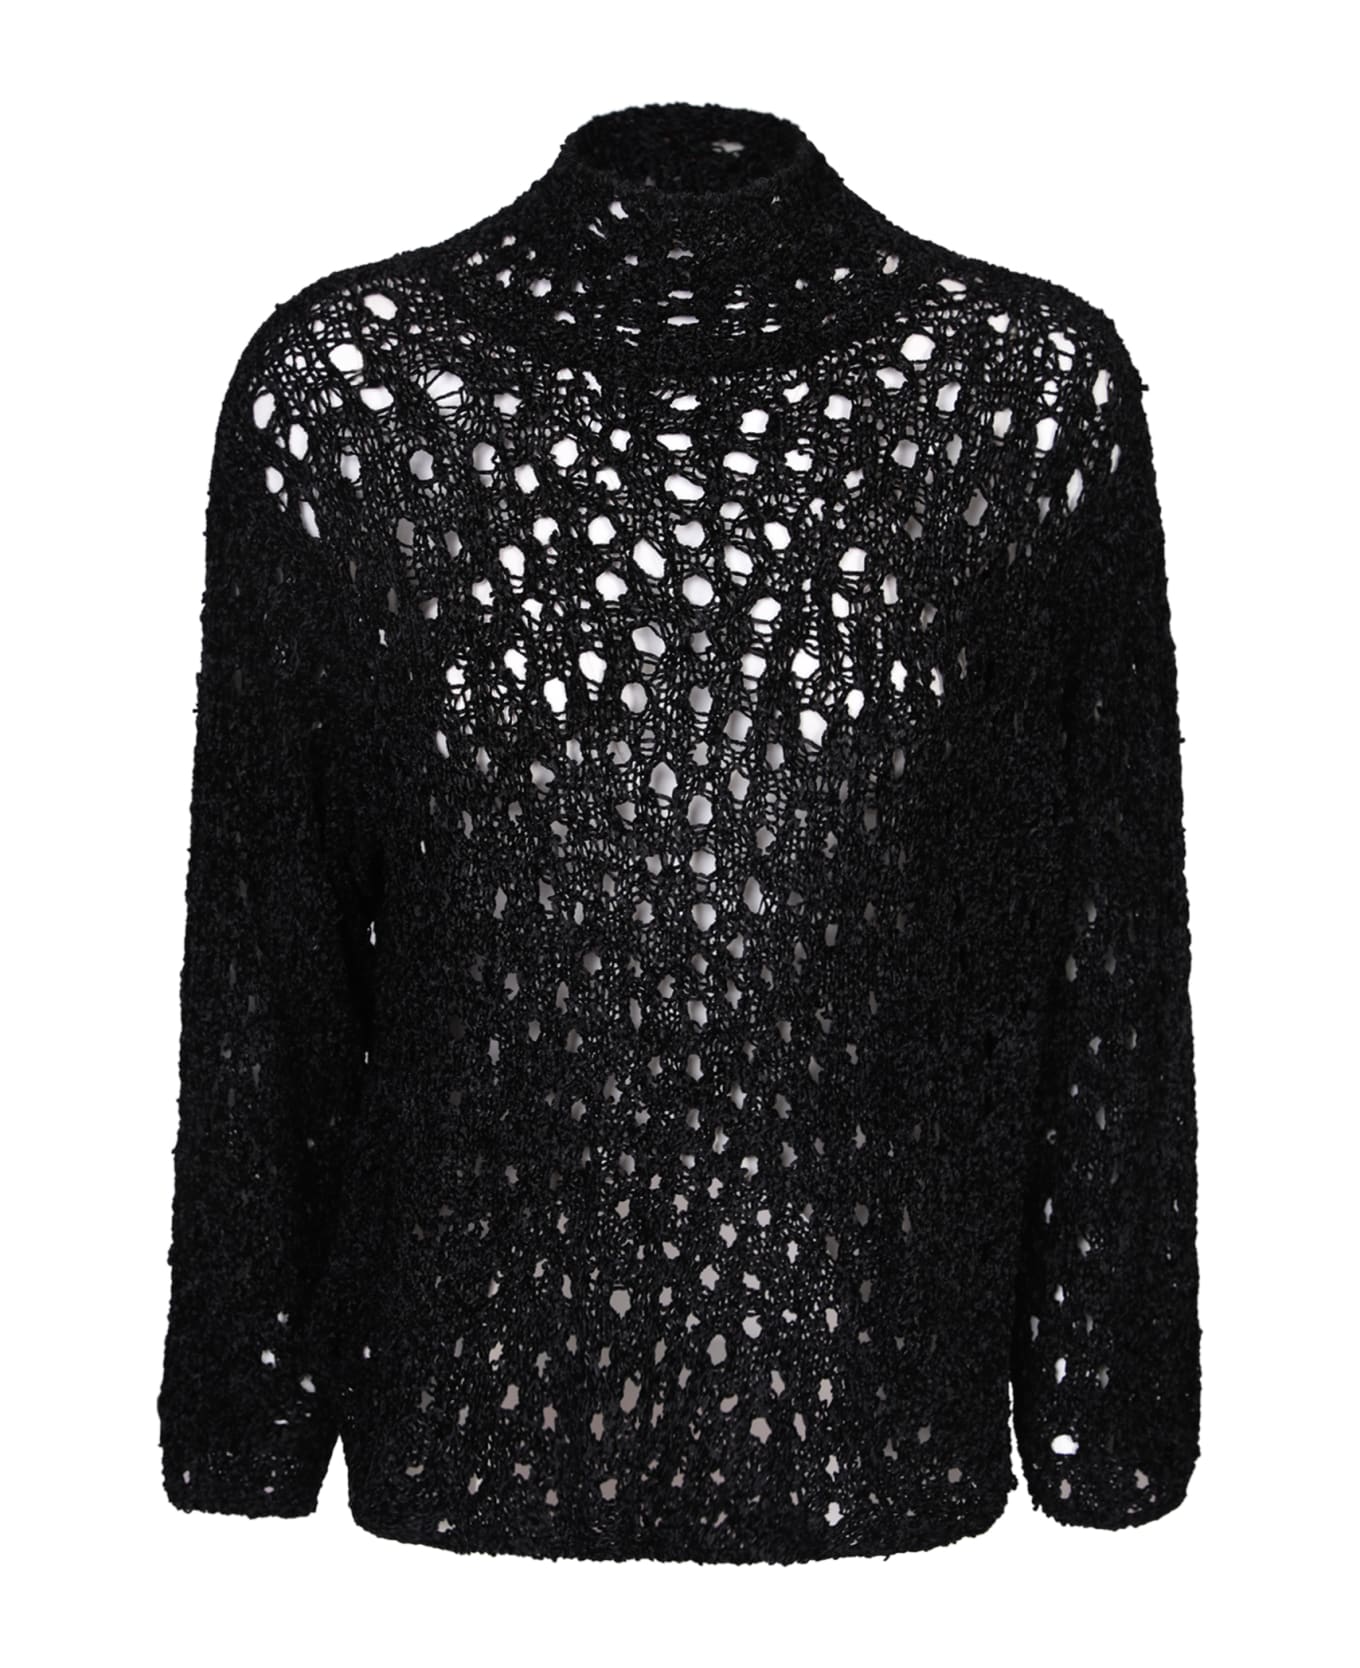 SSHEENA Perforated Knit Sweater Black - Black